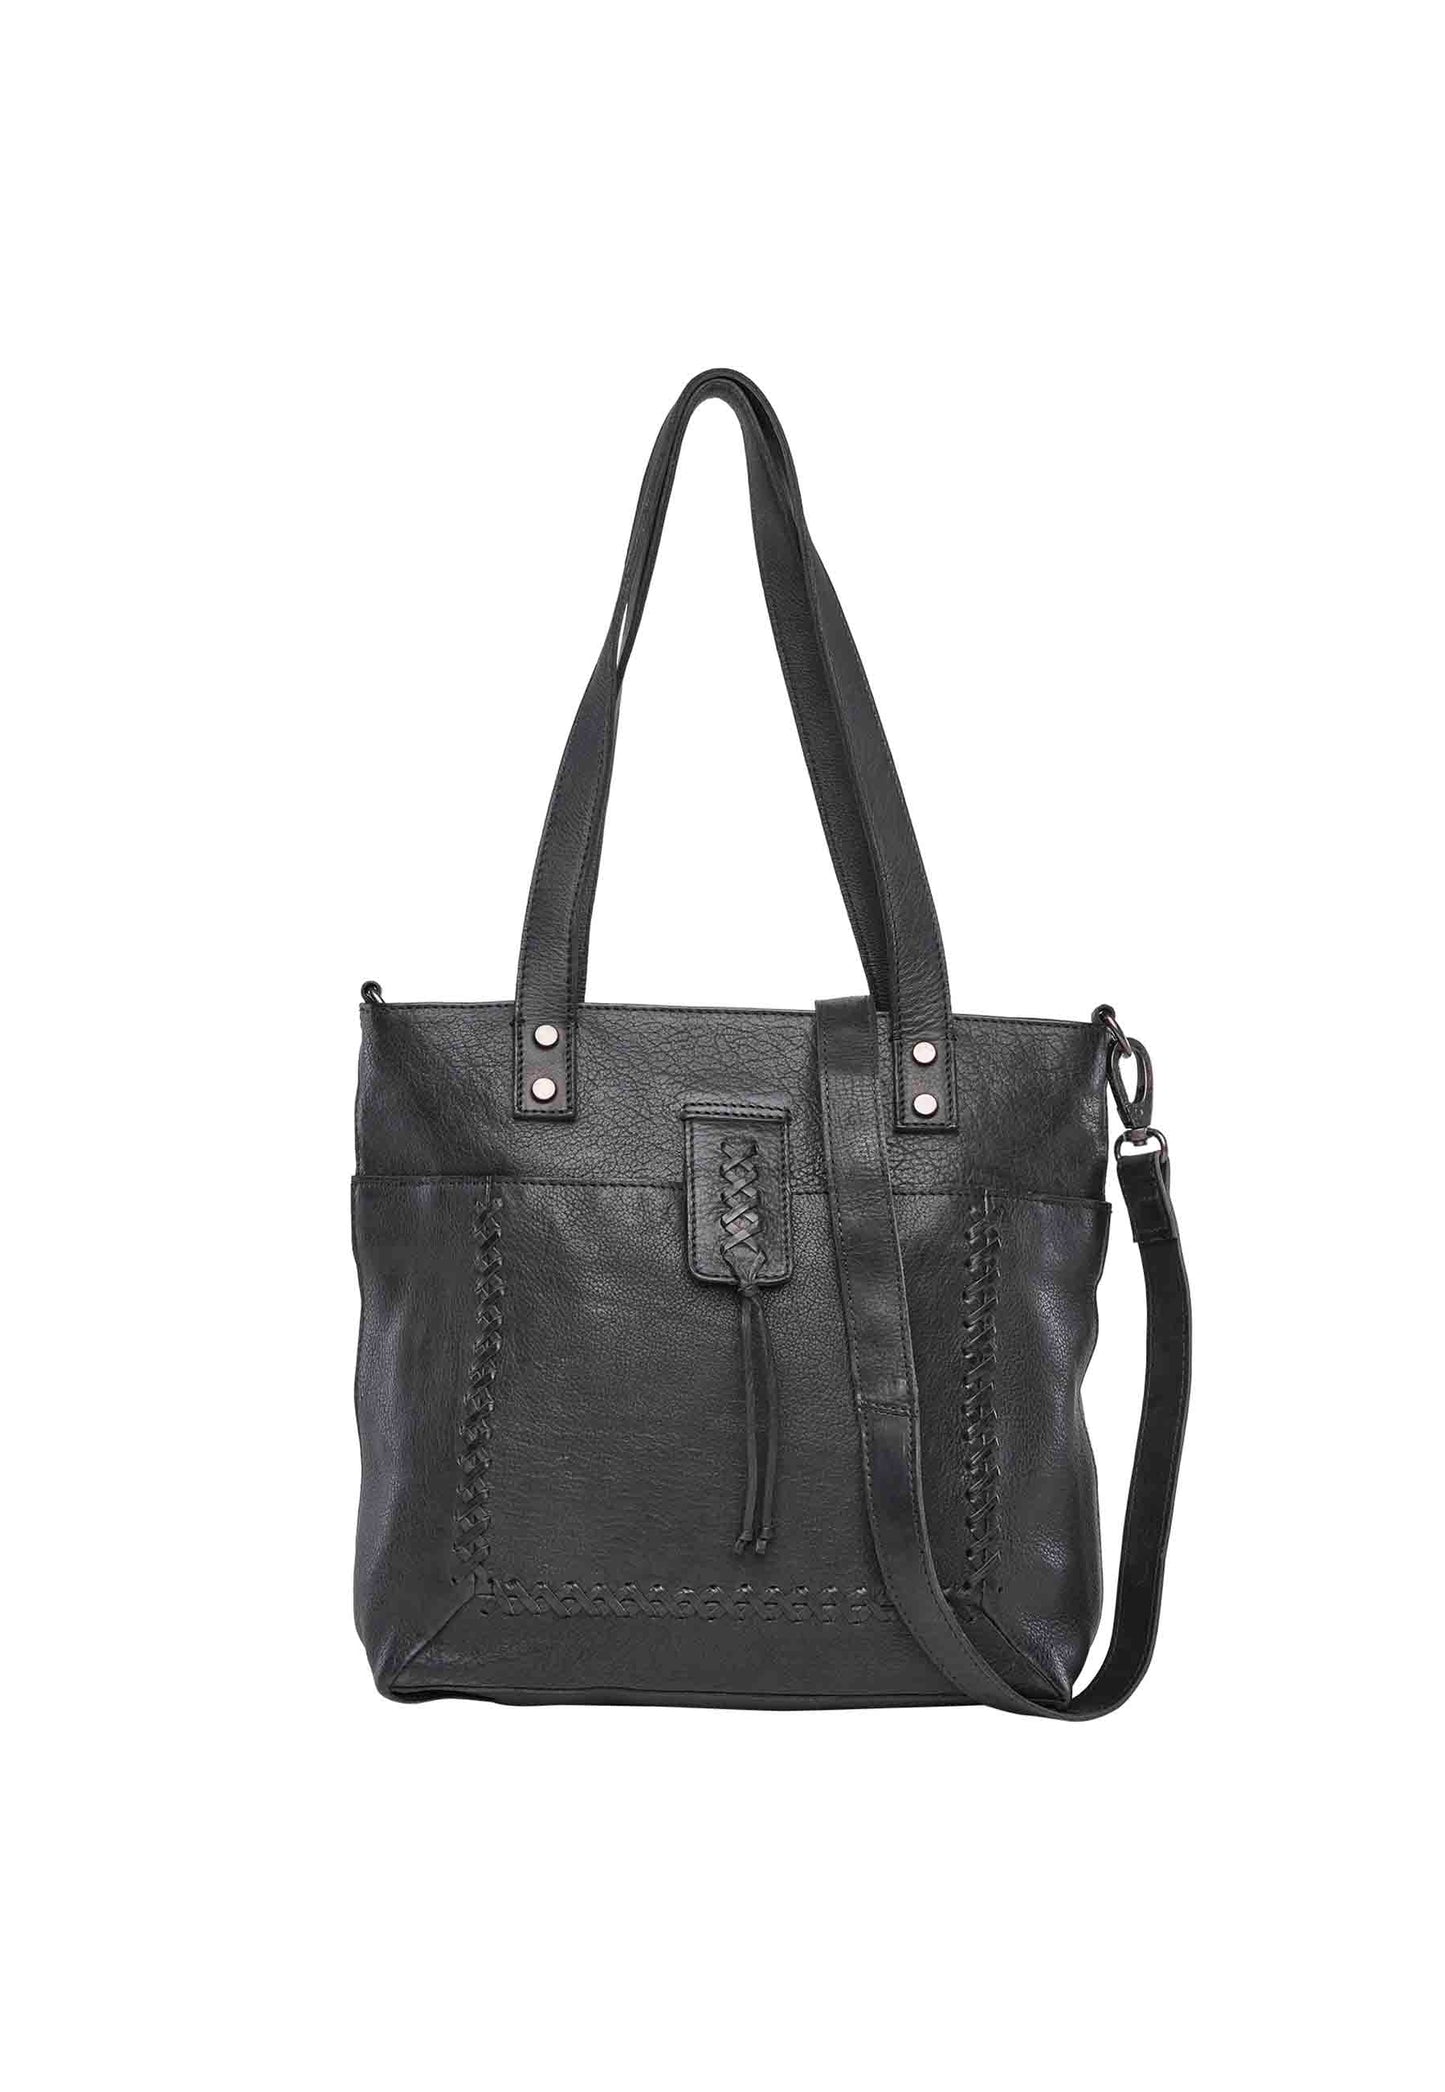 Black leather conceal carry handbag